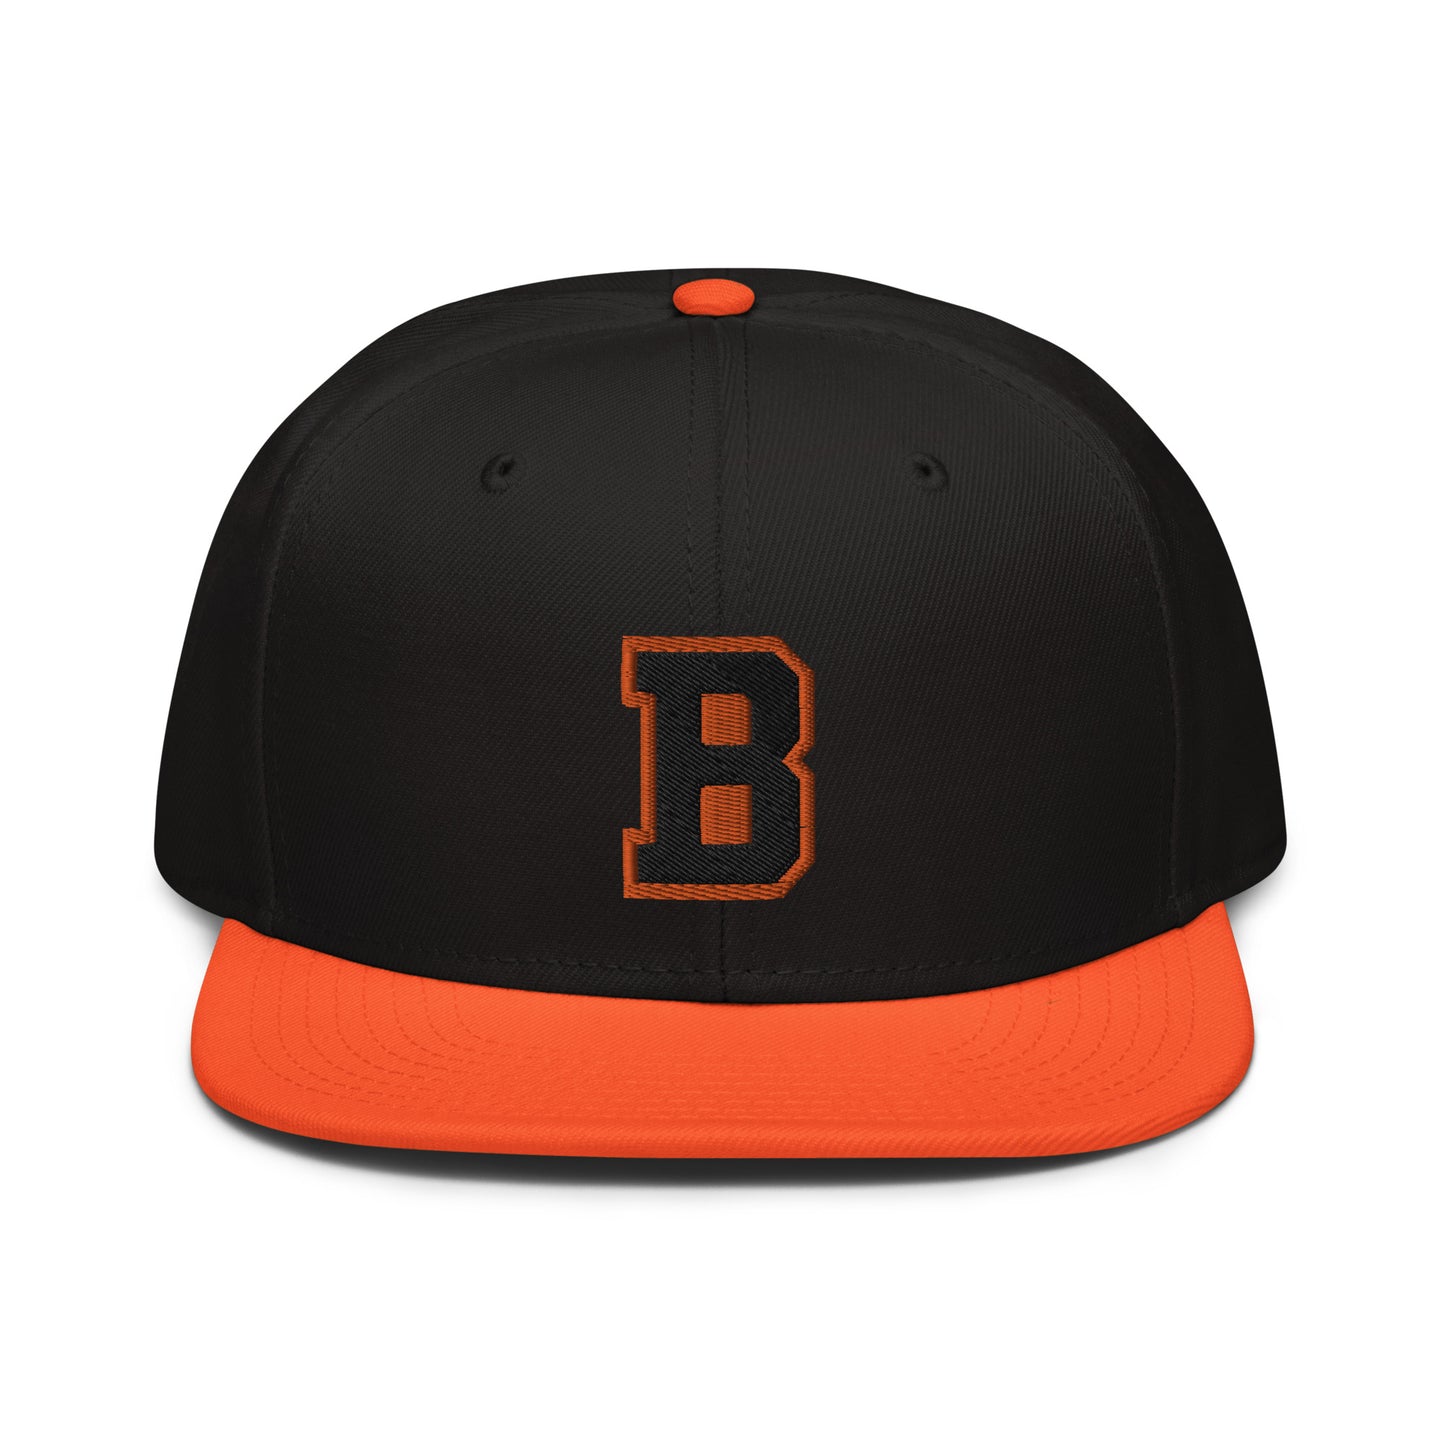 WBLHSB B Snapback Hat